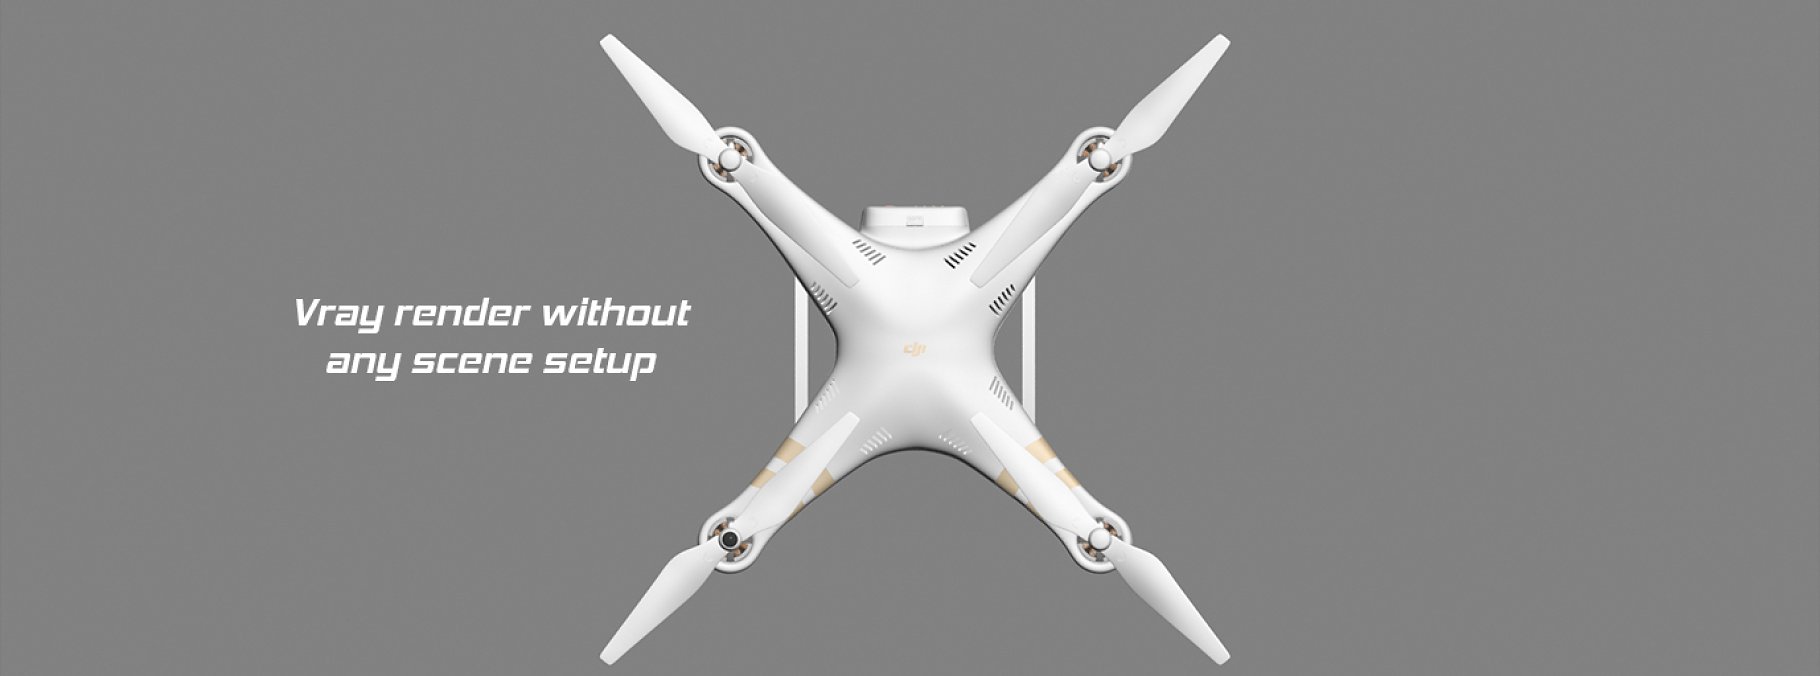 Exquisite 3d model of a white DJI Phantom 3 drone